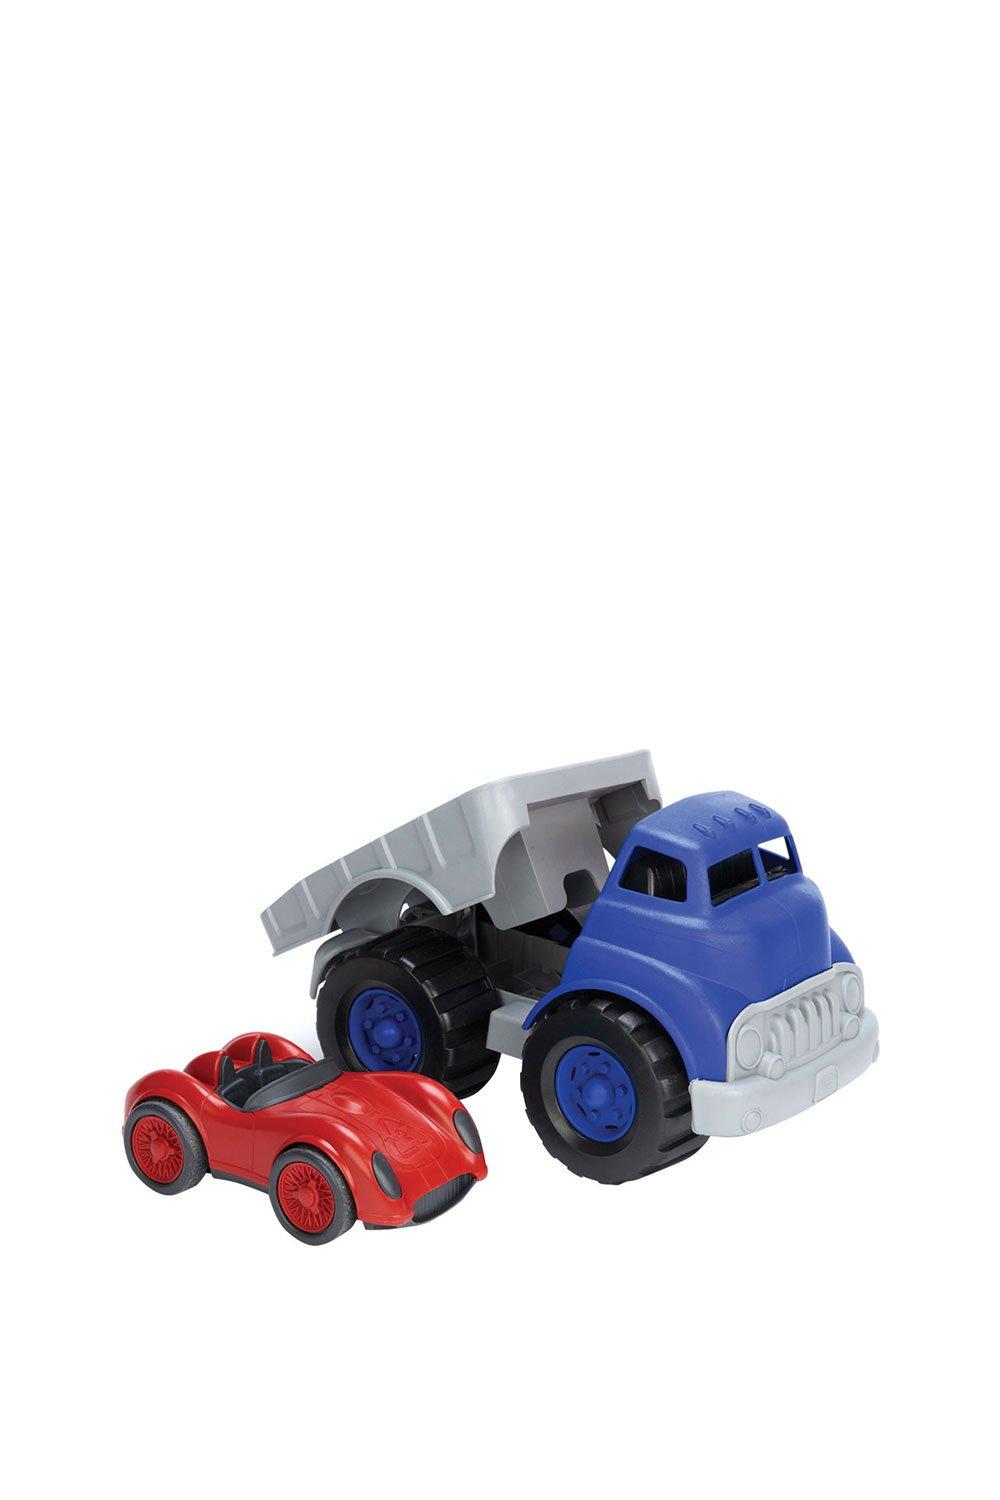 Green Toys Flatbed Truck & Race Car|dark blue